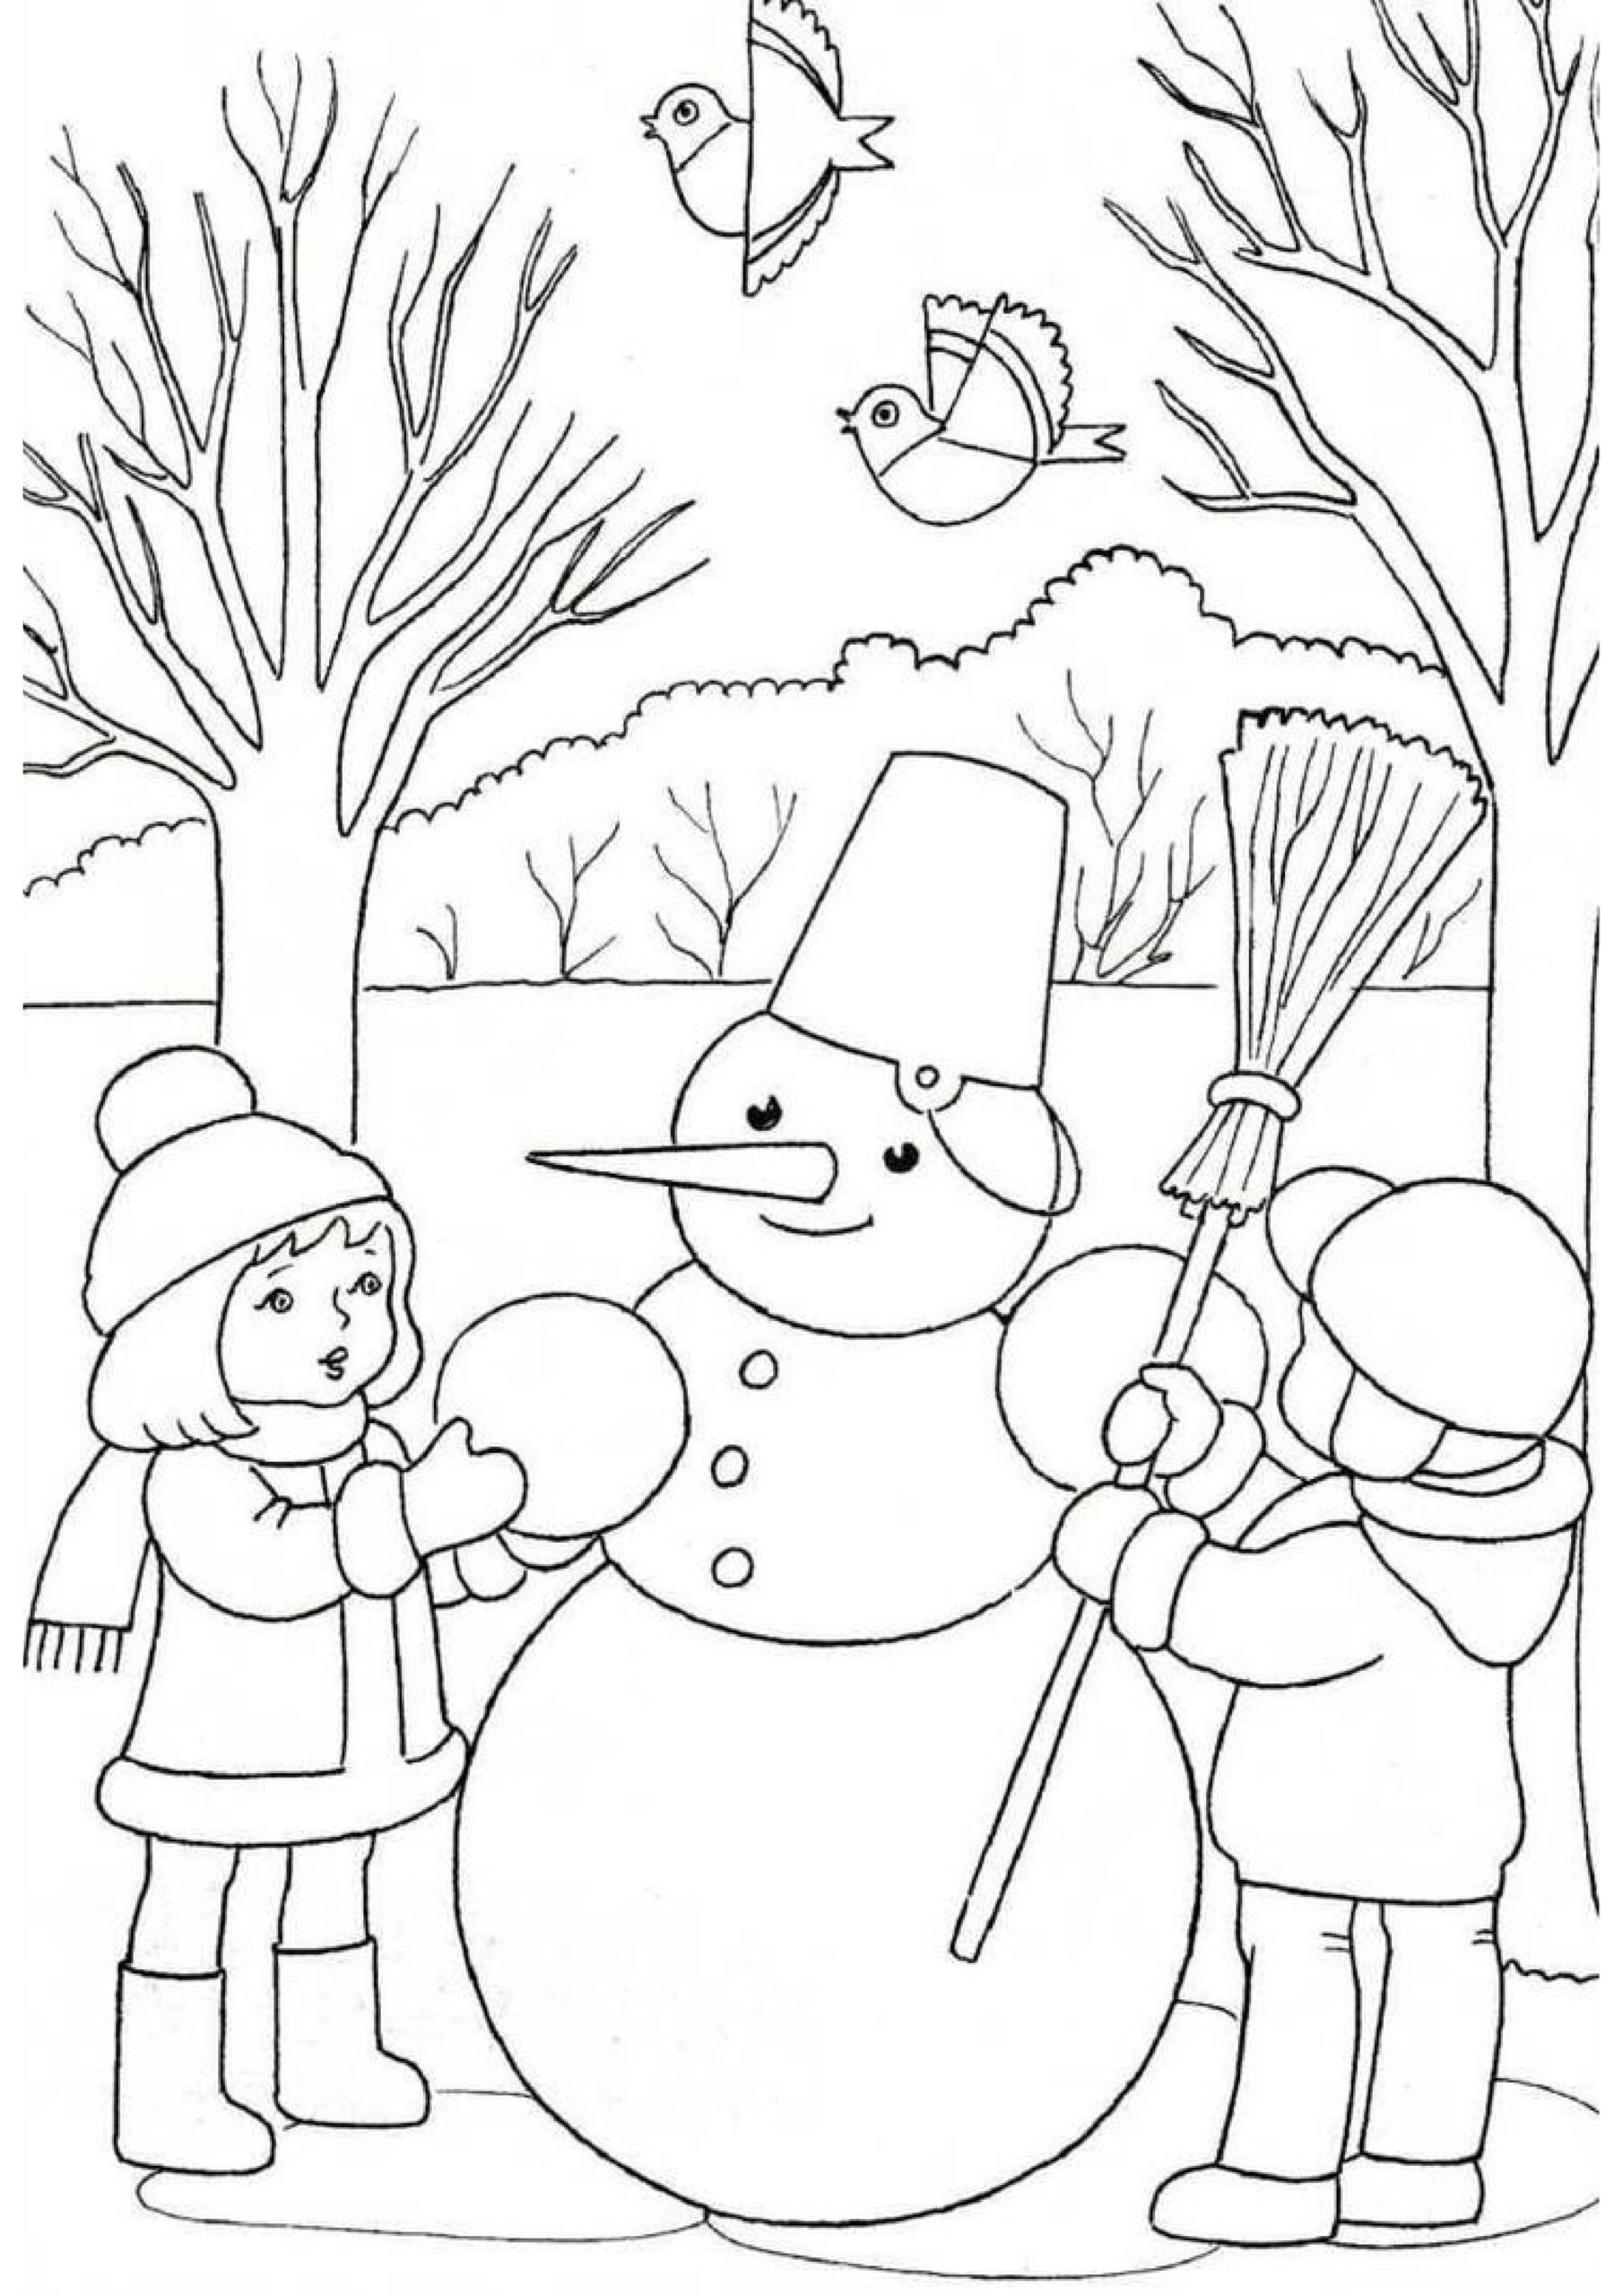 Snowman winter coloring